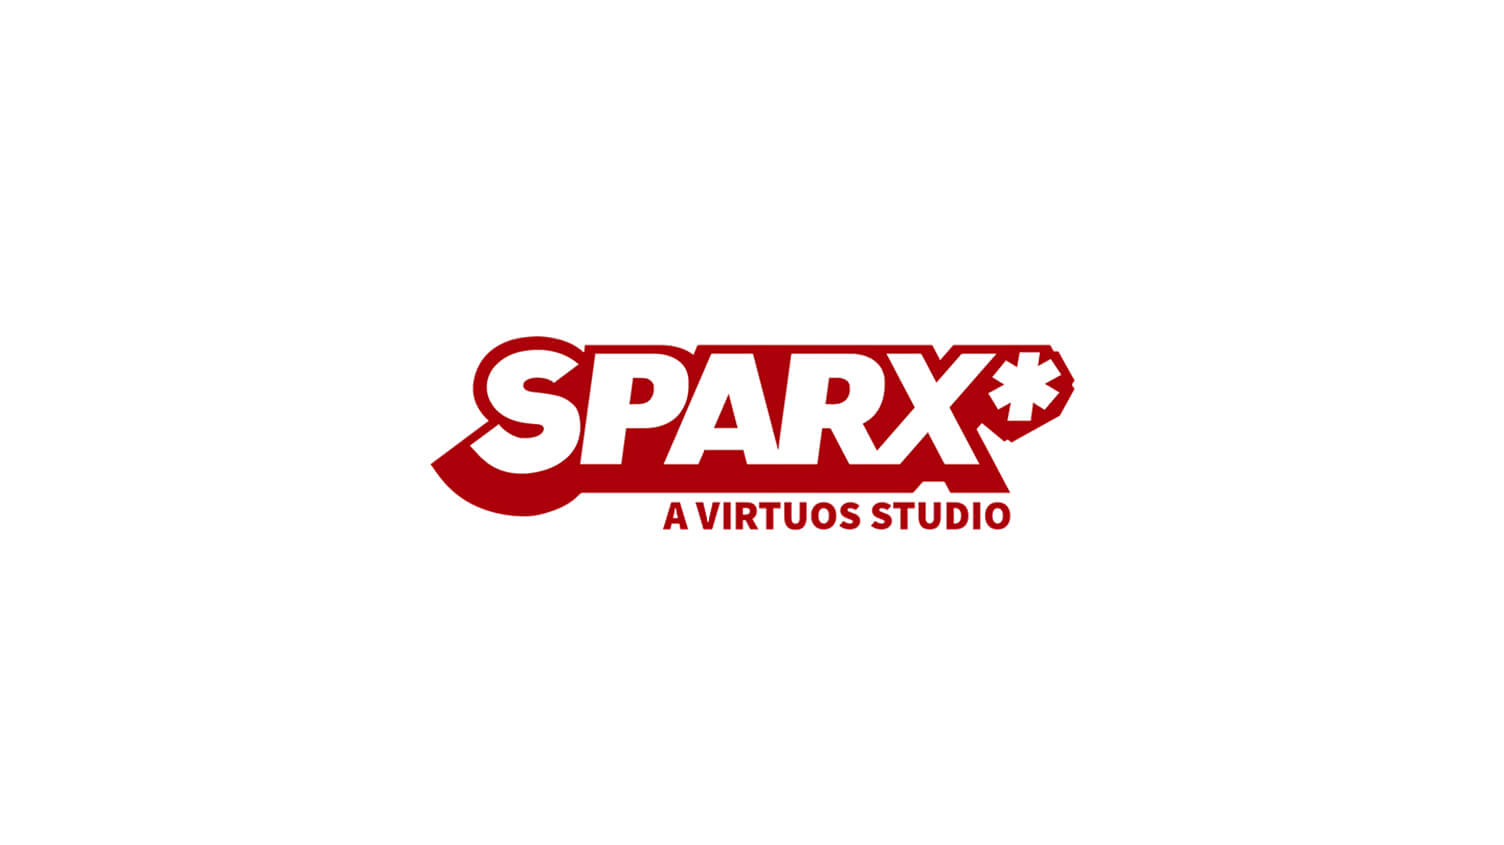 Sparx* - a Virtuos Studio